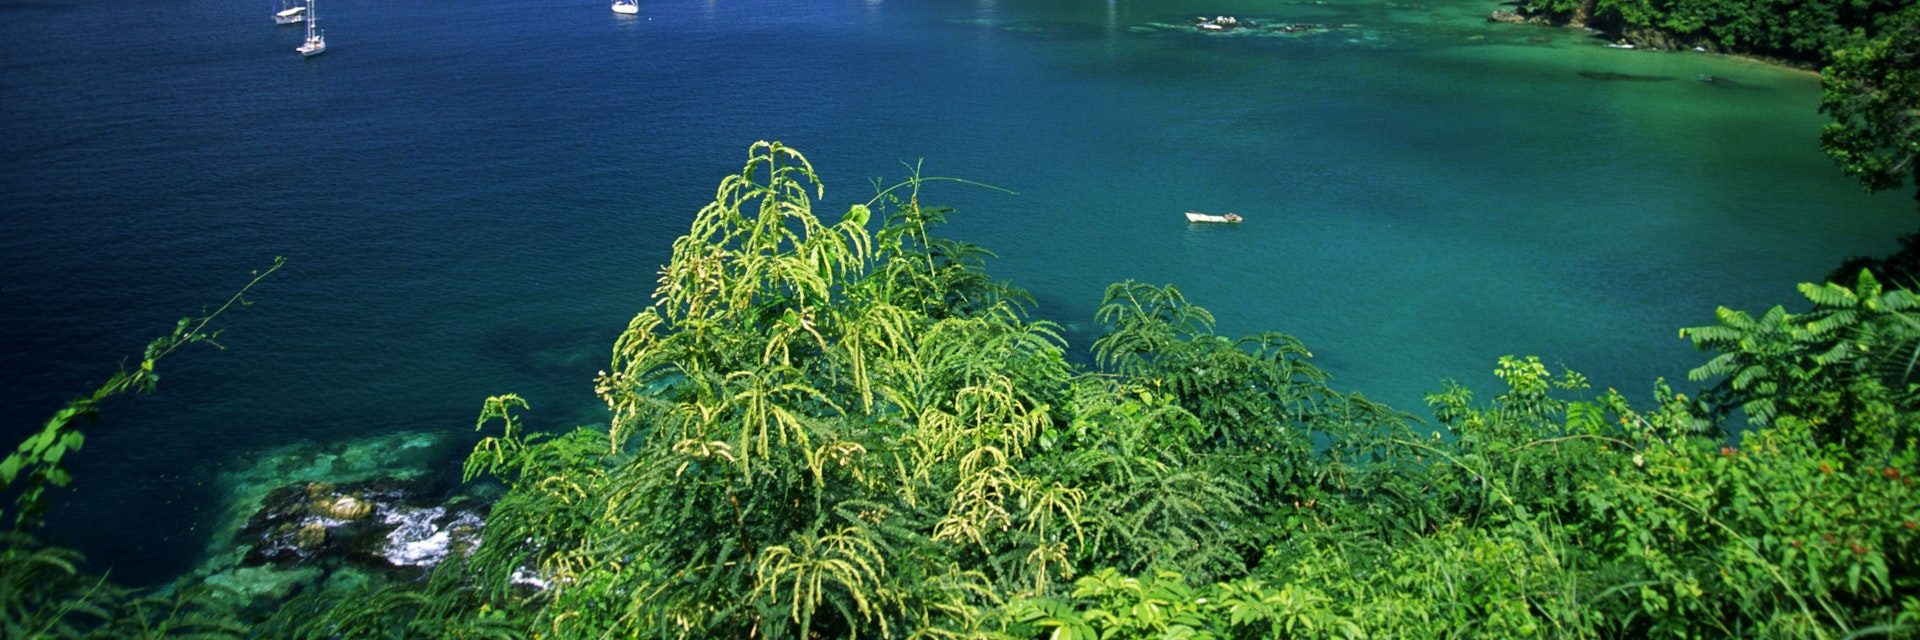 Pirates Bay, Small Antilles, Tobago, Caribbean